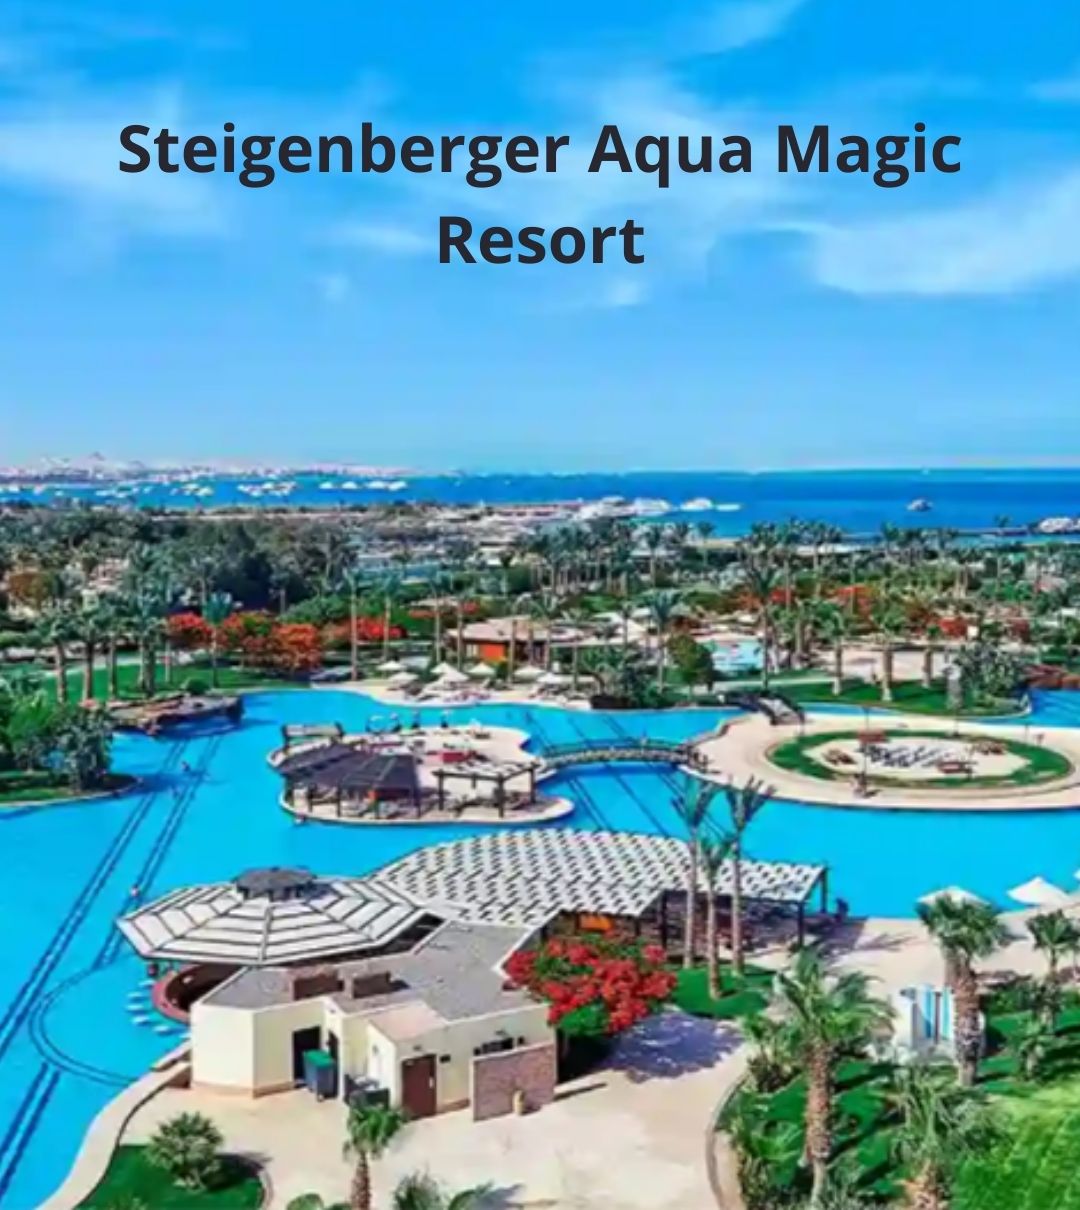 Beograd turisticka agencija - Hotel Steigenberger Aqua Magic